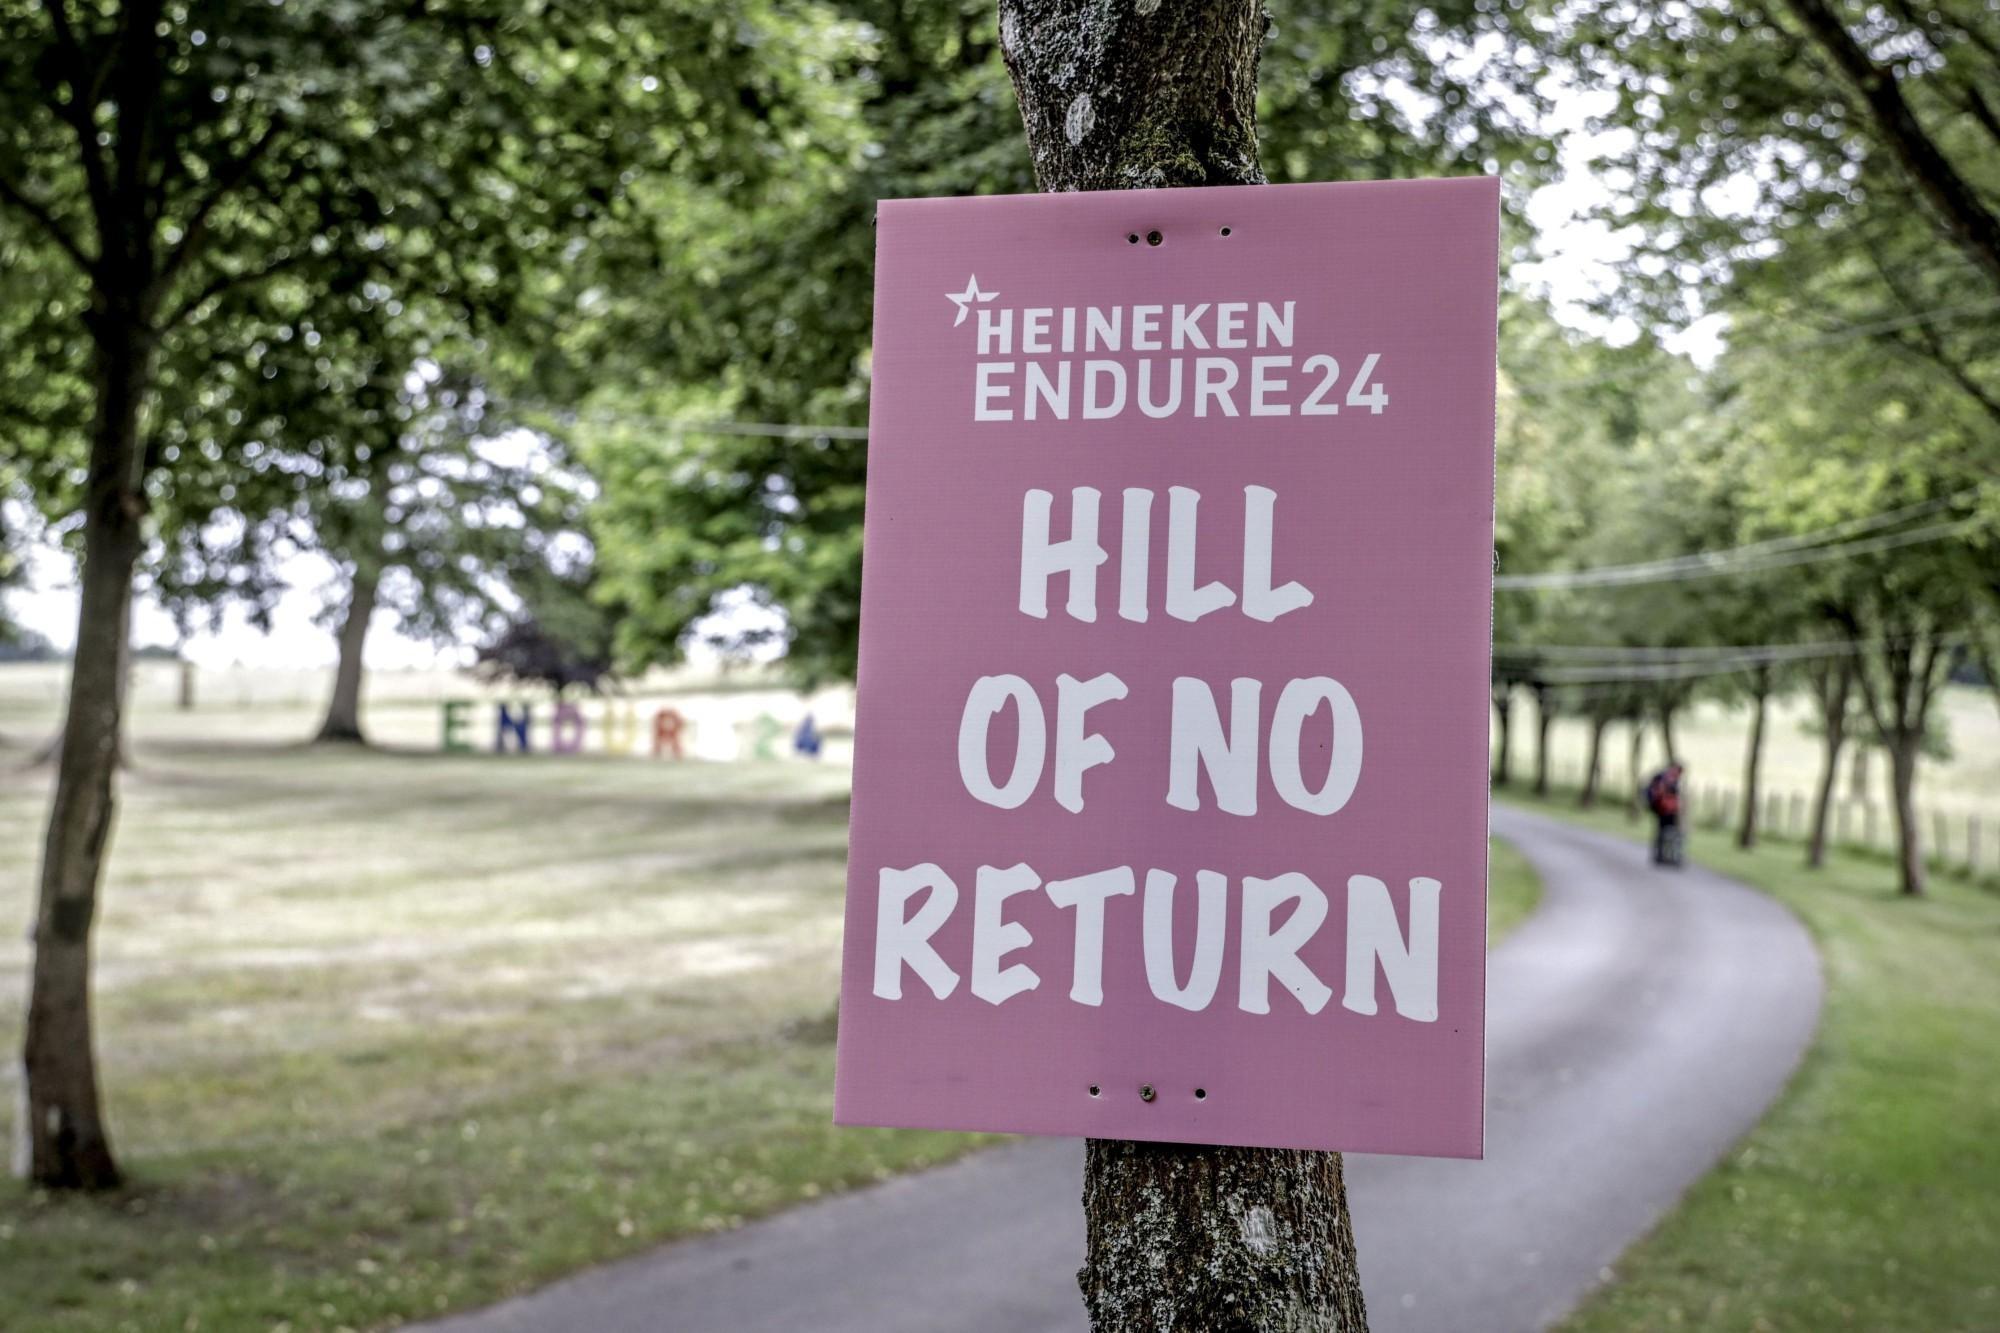 Hill of no return